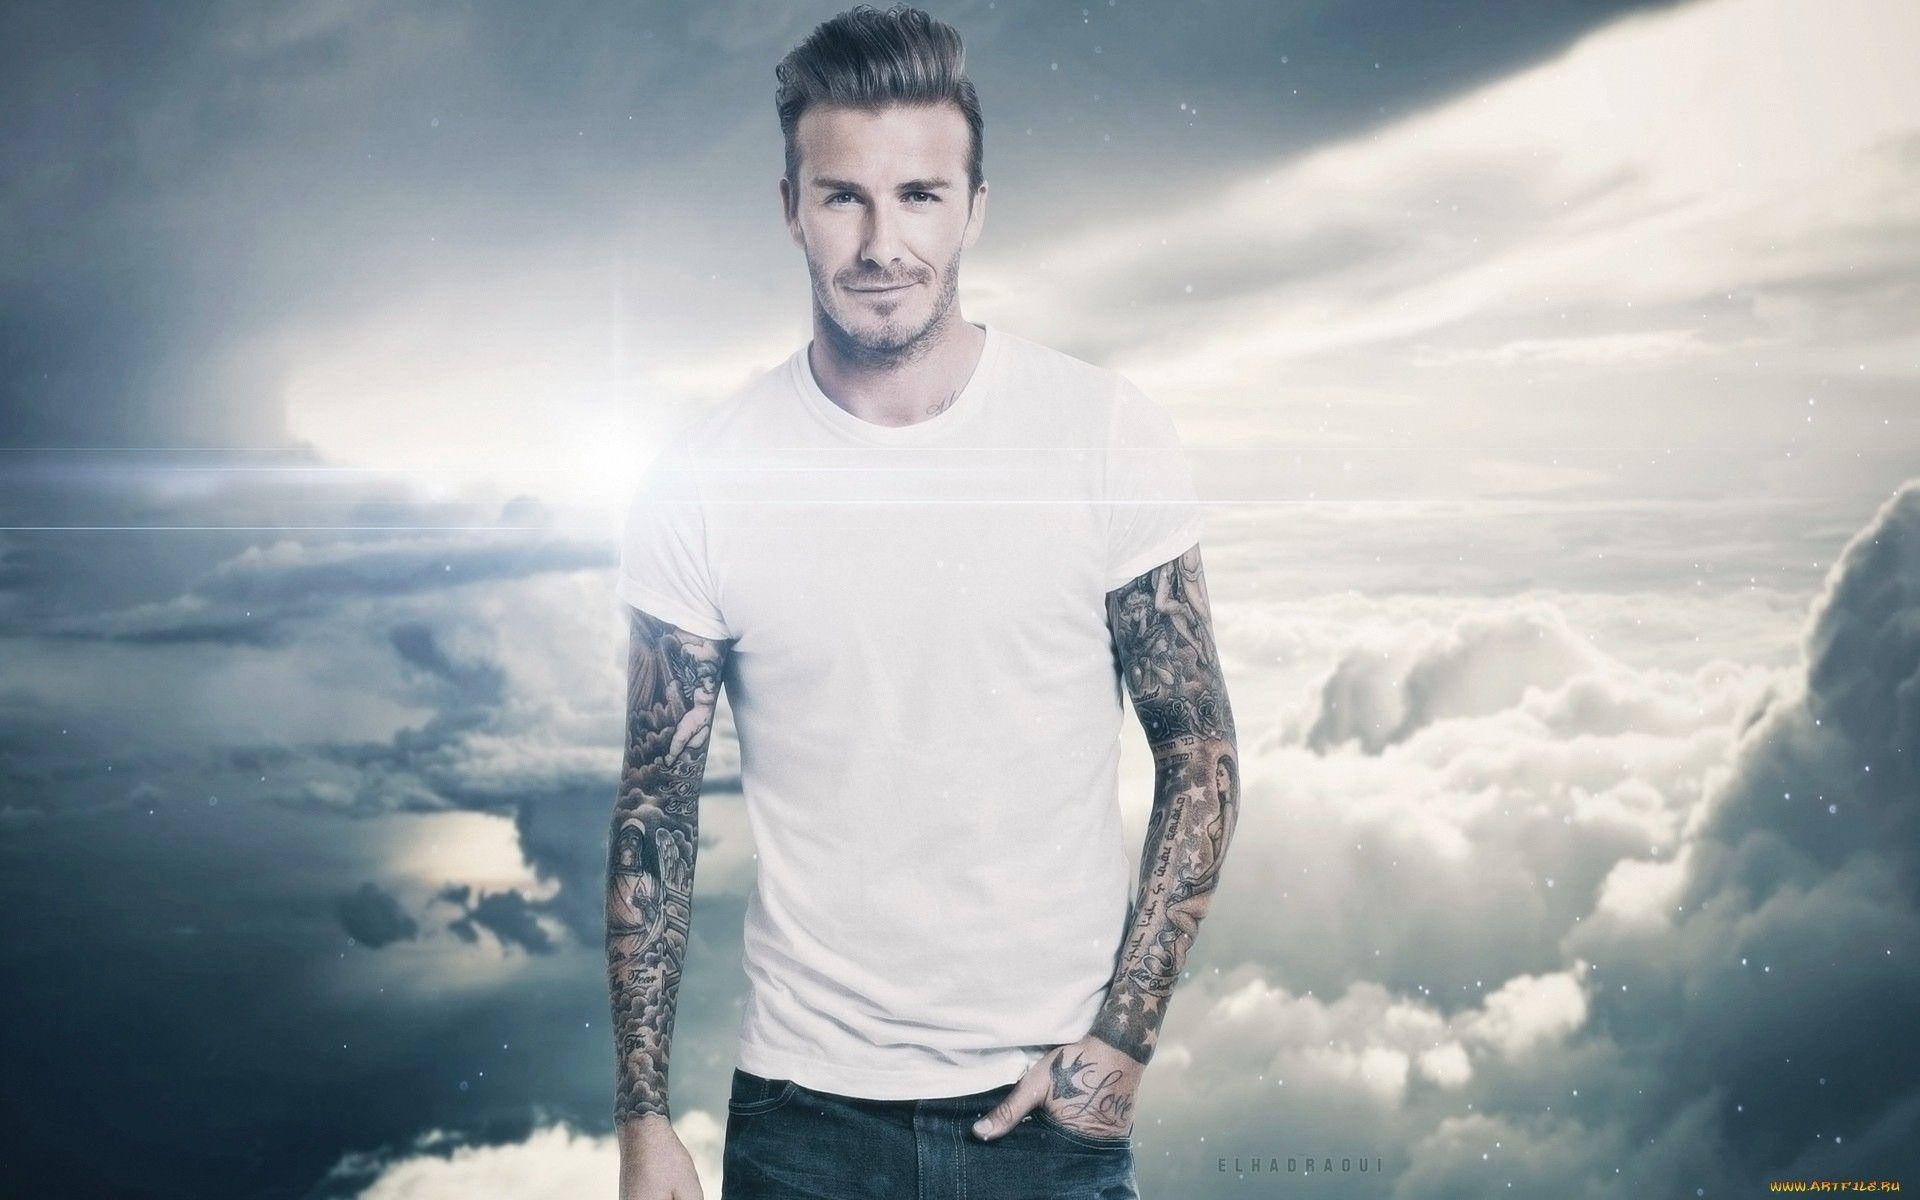 Free David Beckham Wallpaper Downloads, [100+] David Beckham Wallpapers for  FREE 